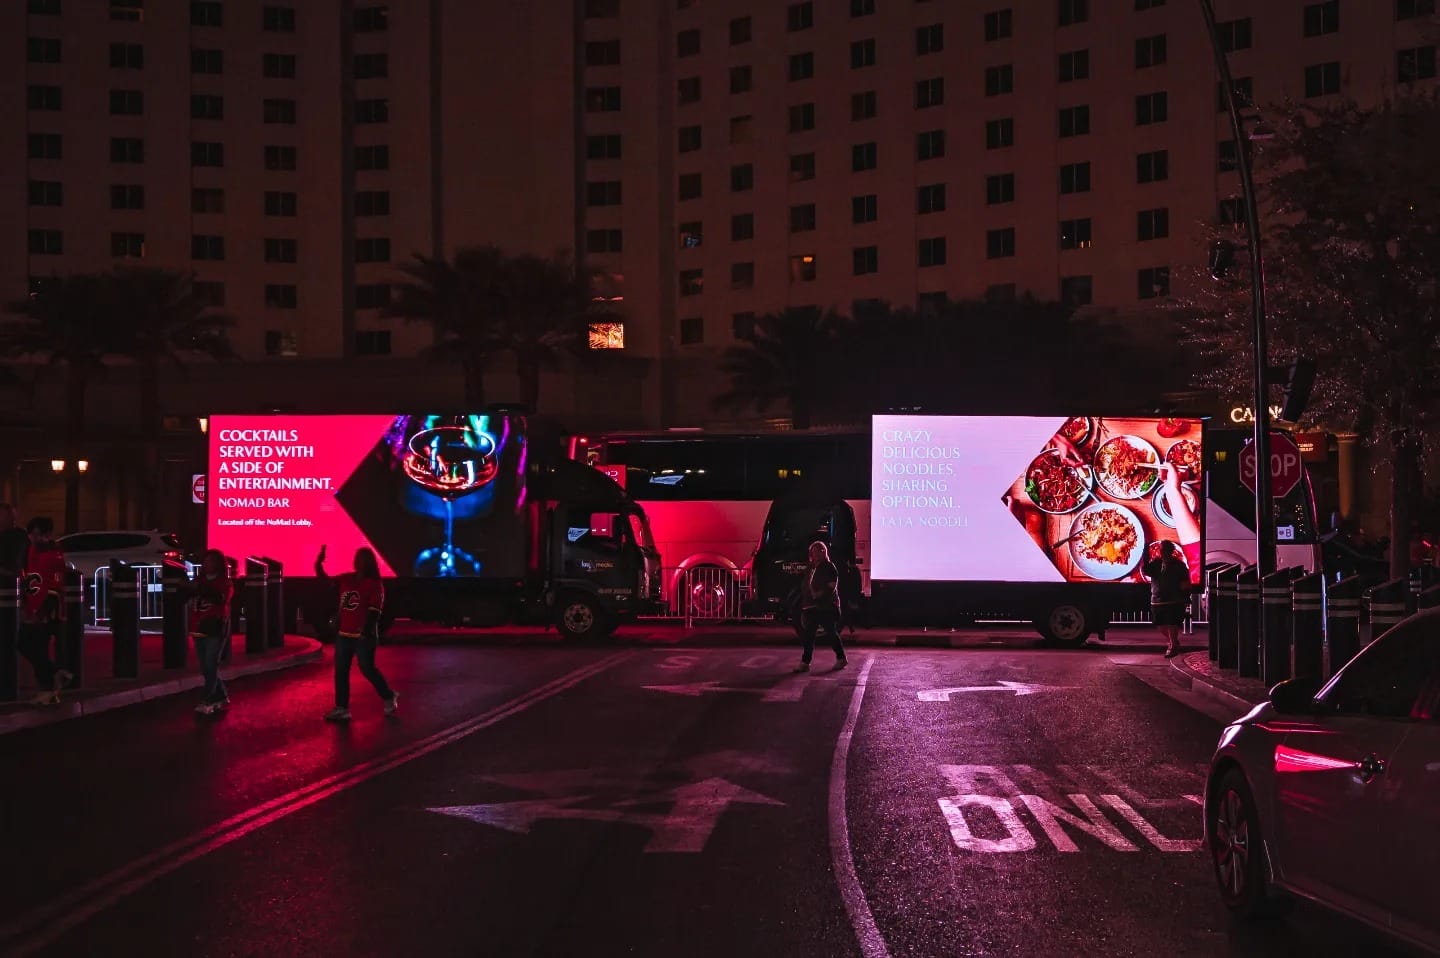 Illuminated food truck ads on city street at dusk.